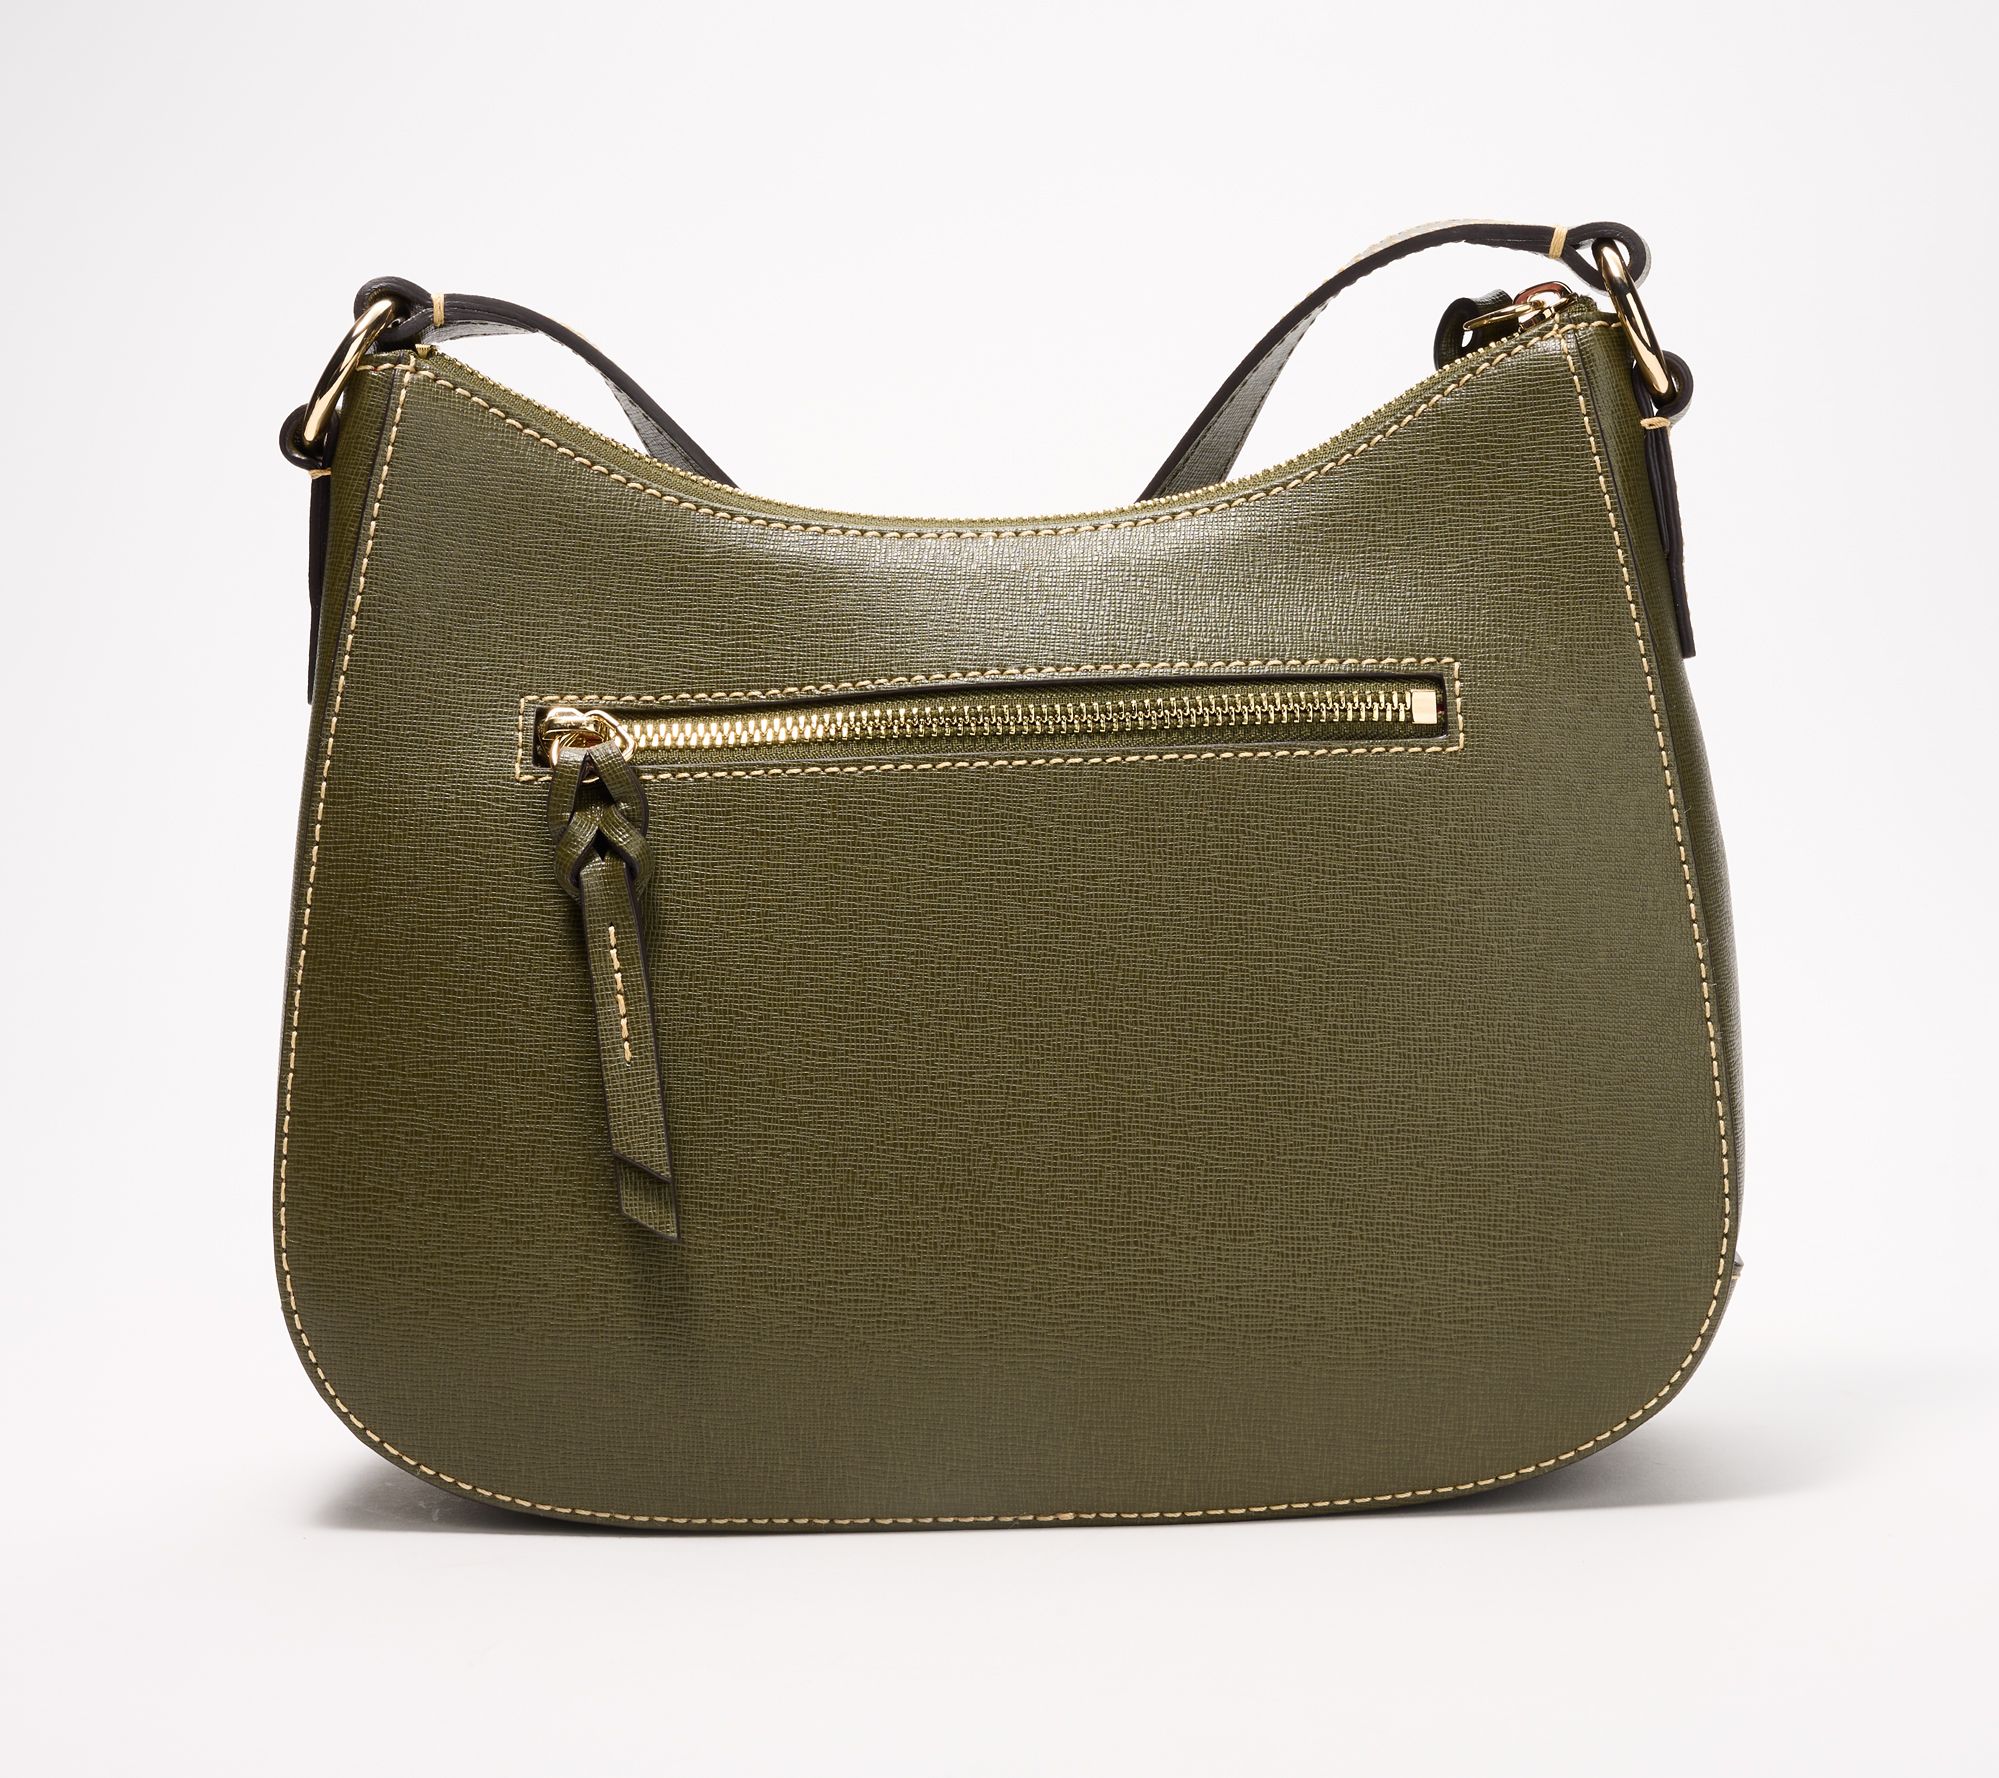 Dooney & Bourke Saffiano Leather Double Strap Tassel Bag on QVC